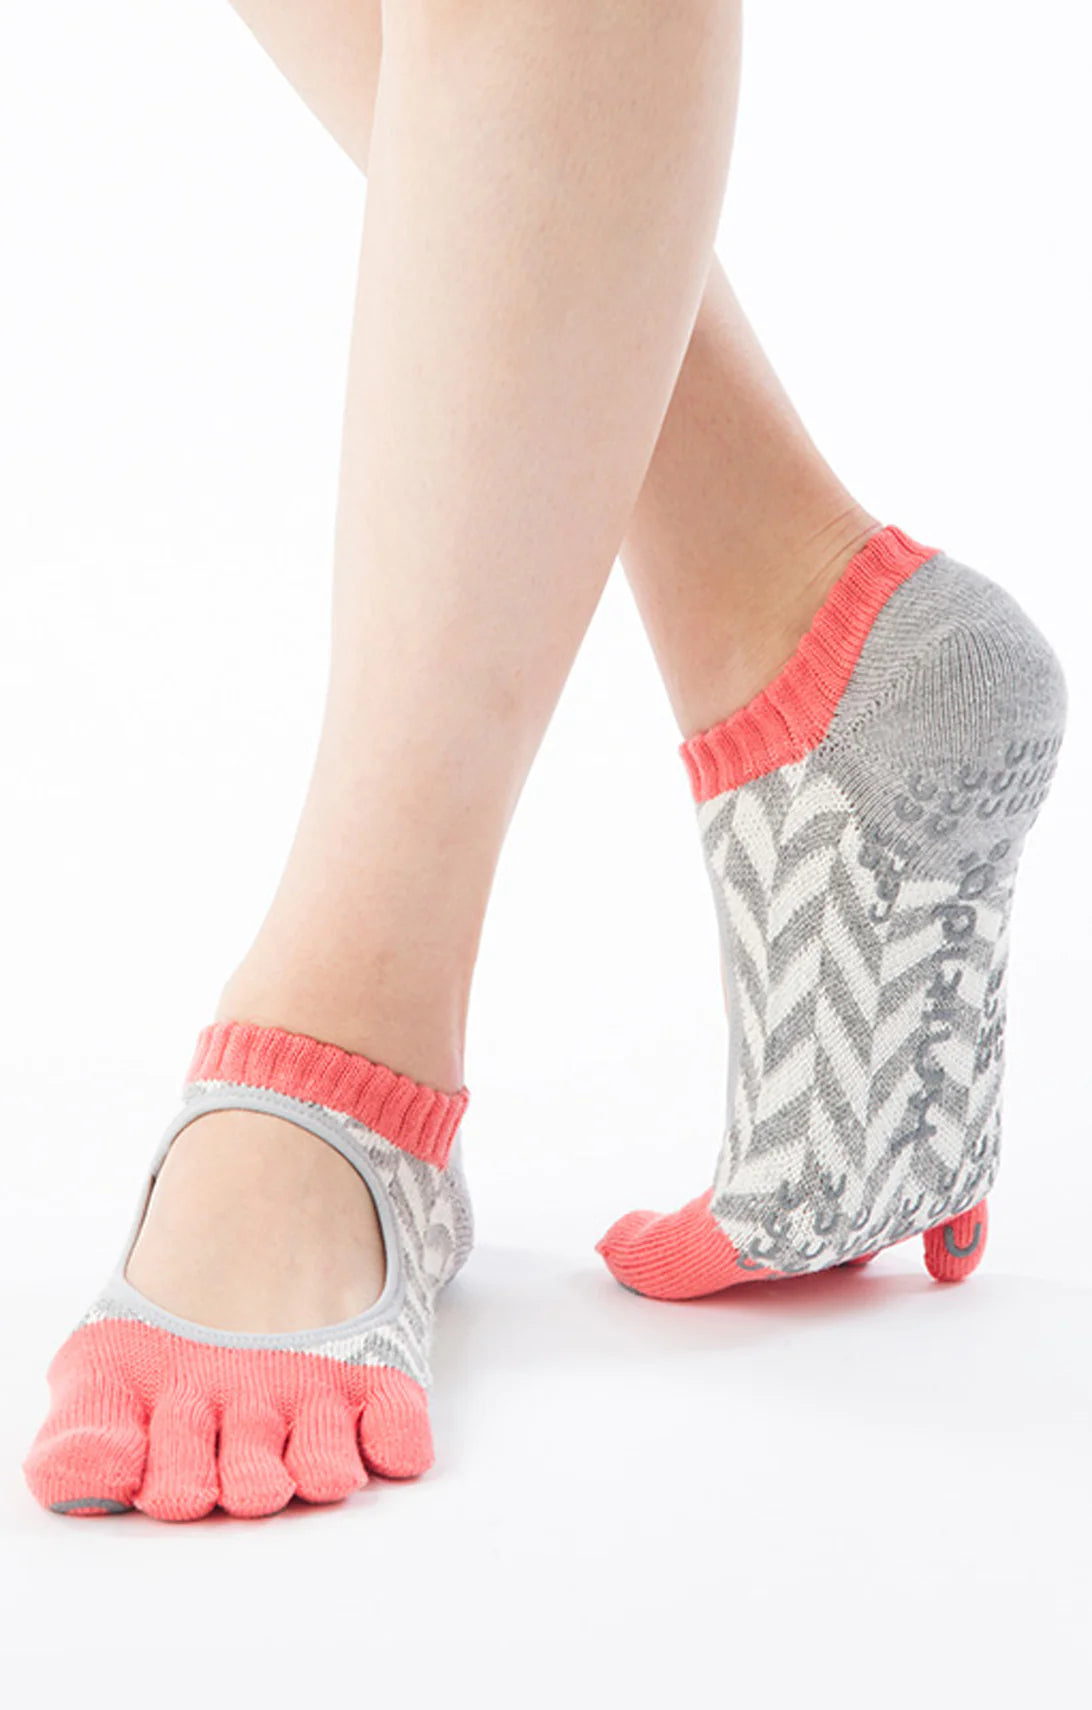 Knitido plus’s Organic Cotton Herringbone Liner Socks in CORAL color